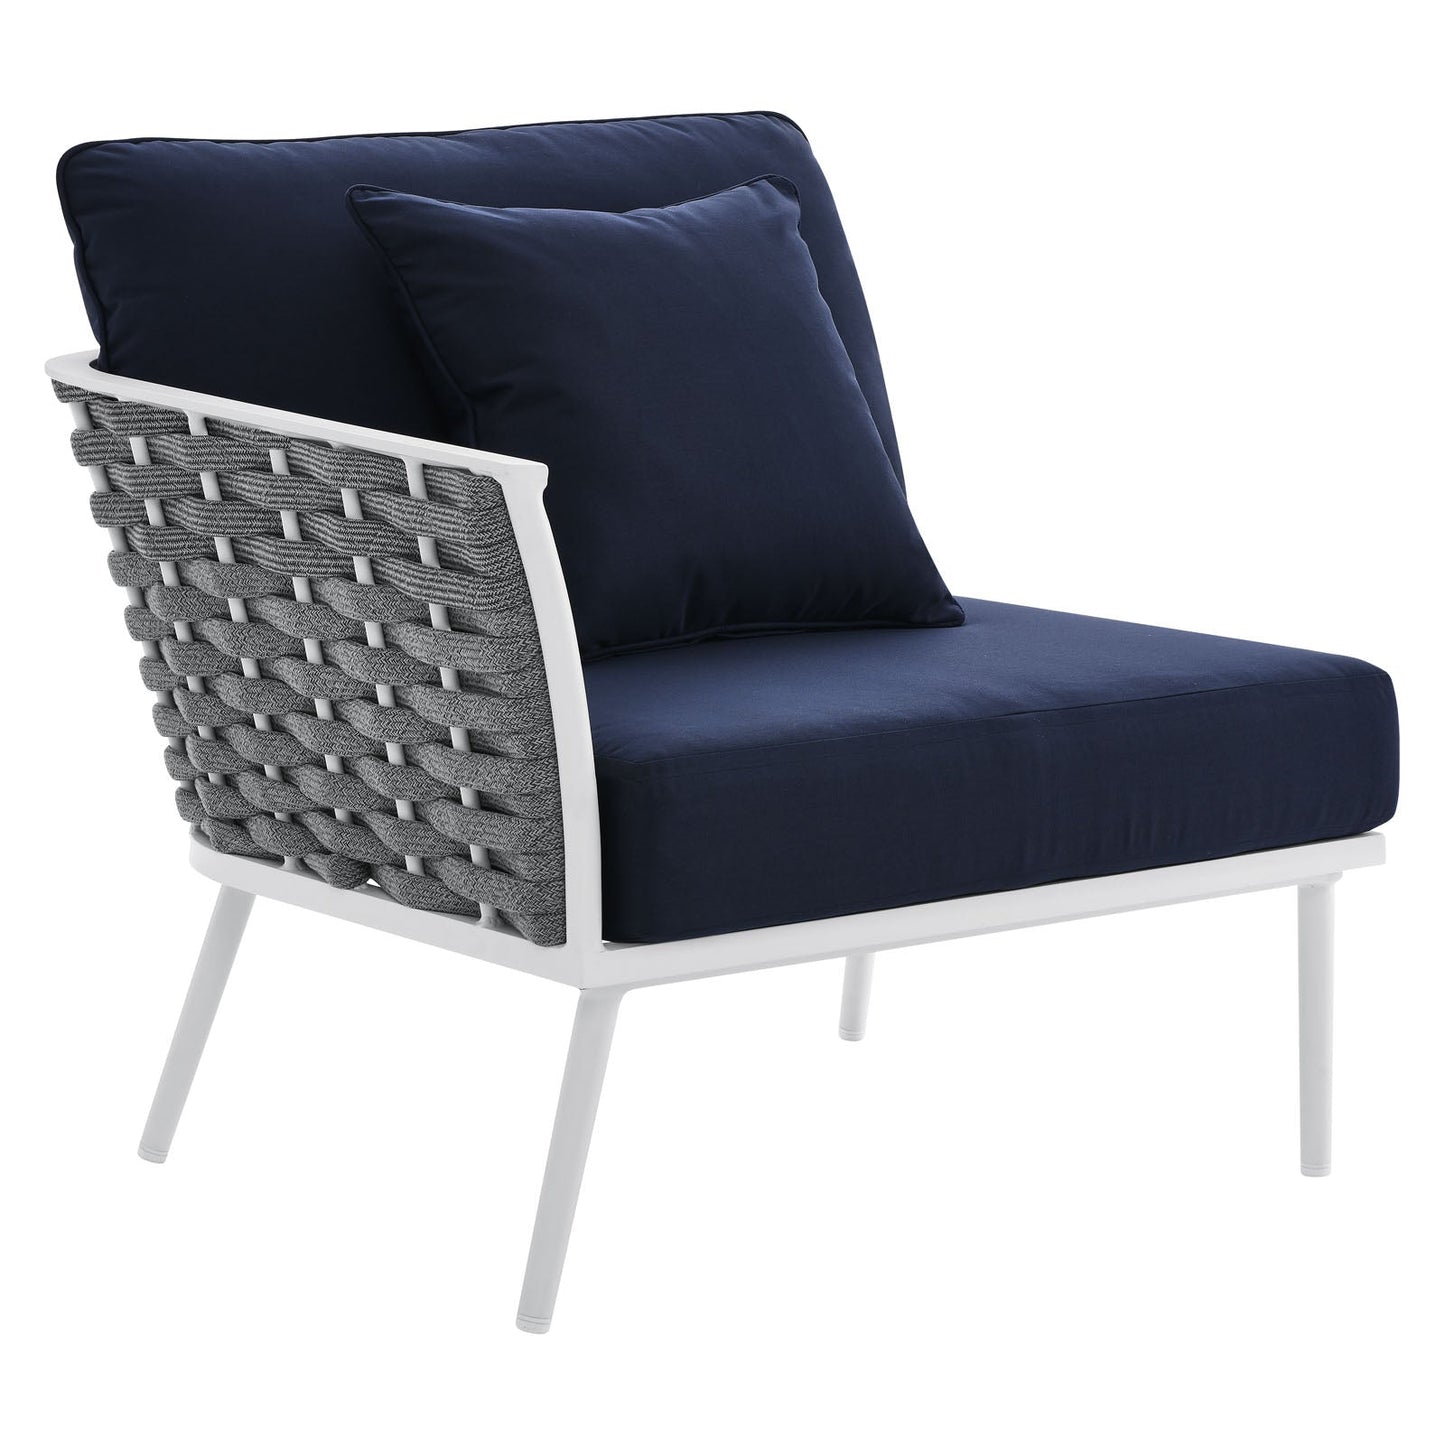 Hanna Outdoor Patio Aluminum Left-Facing Armchair